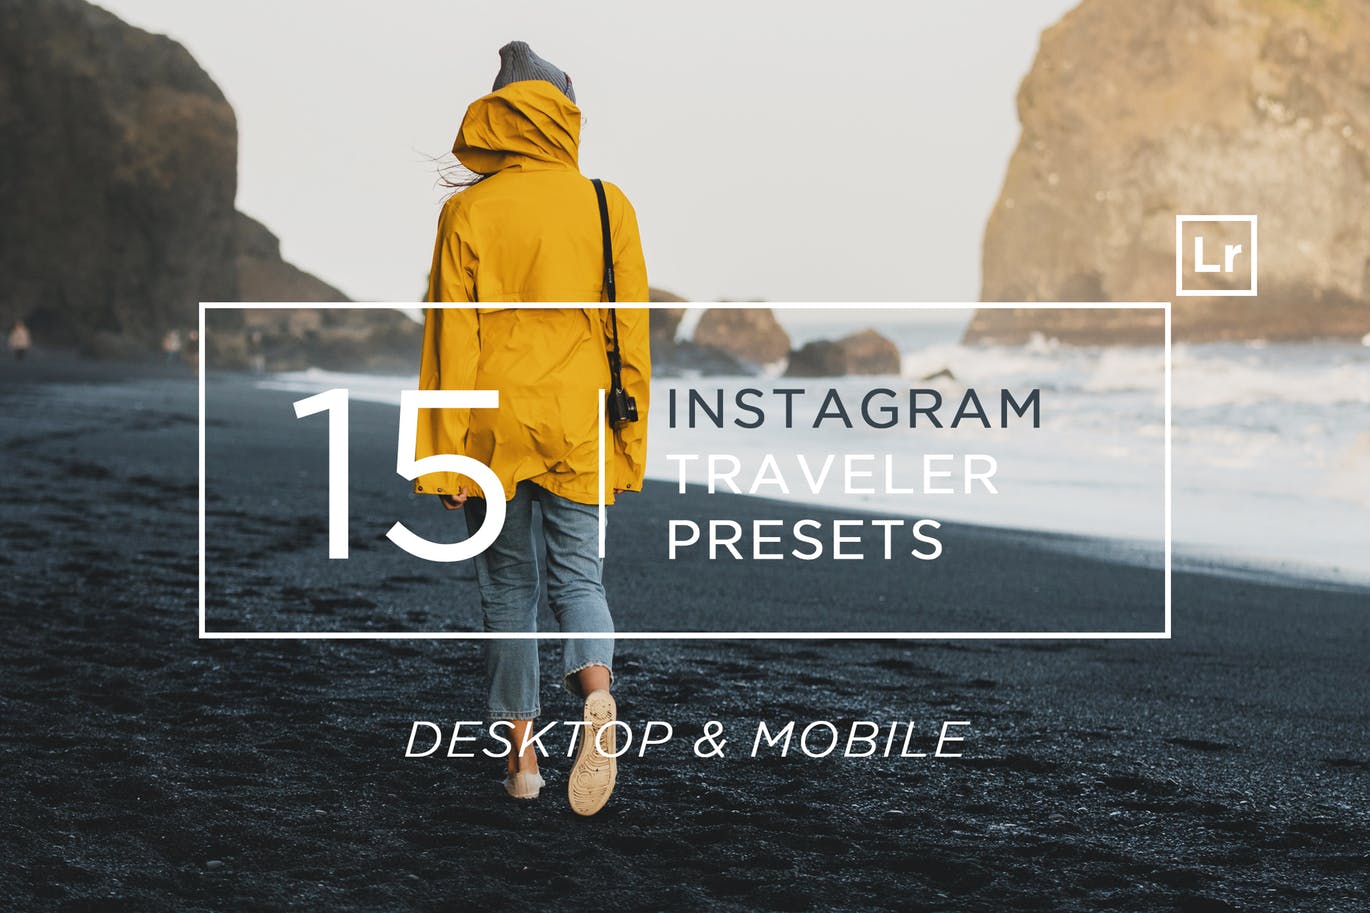 15款Instagram社交旅行照片滤镜风格素材库精选LR预设 15 Instagram Traveler Ligtroom Presets + Mobile插图